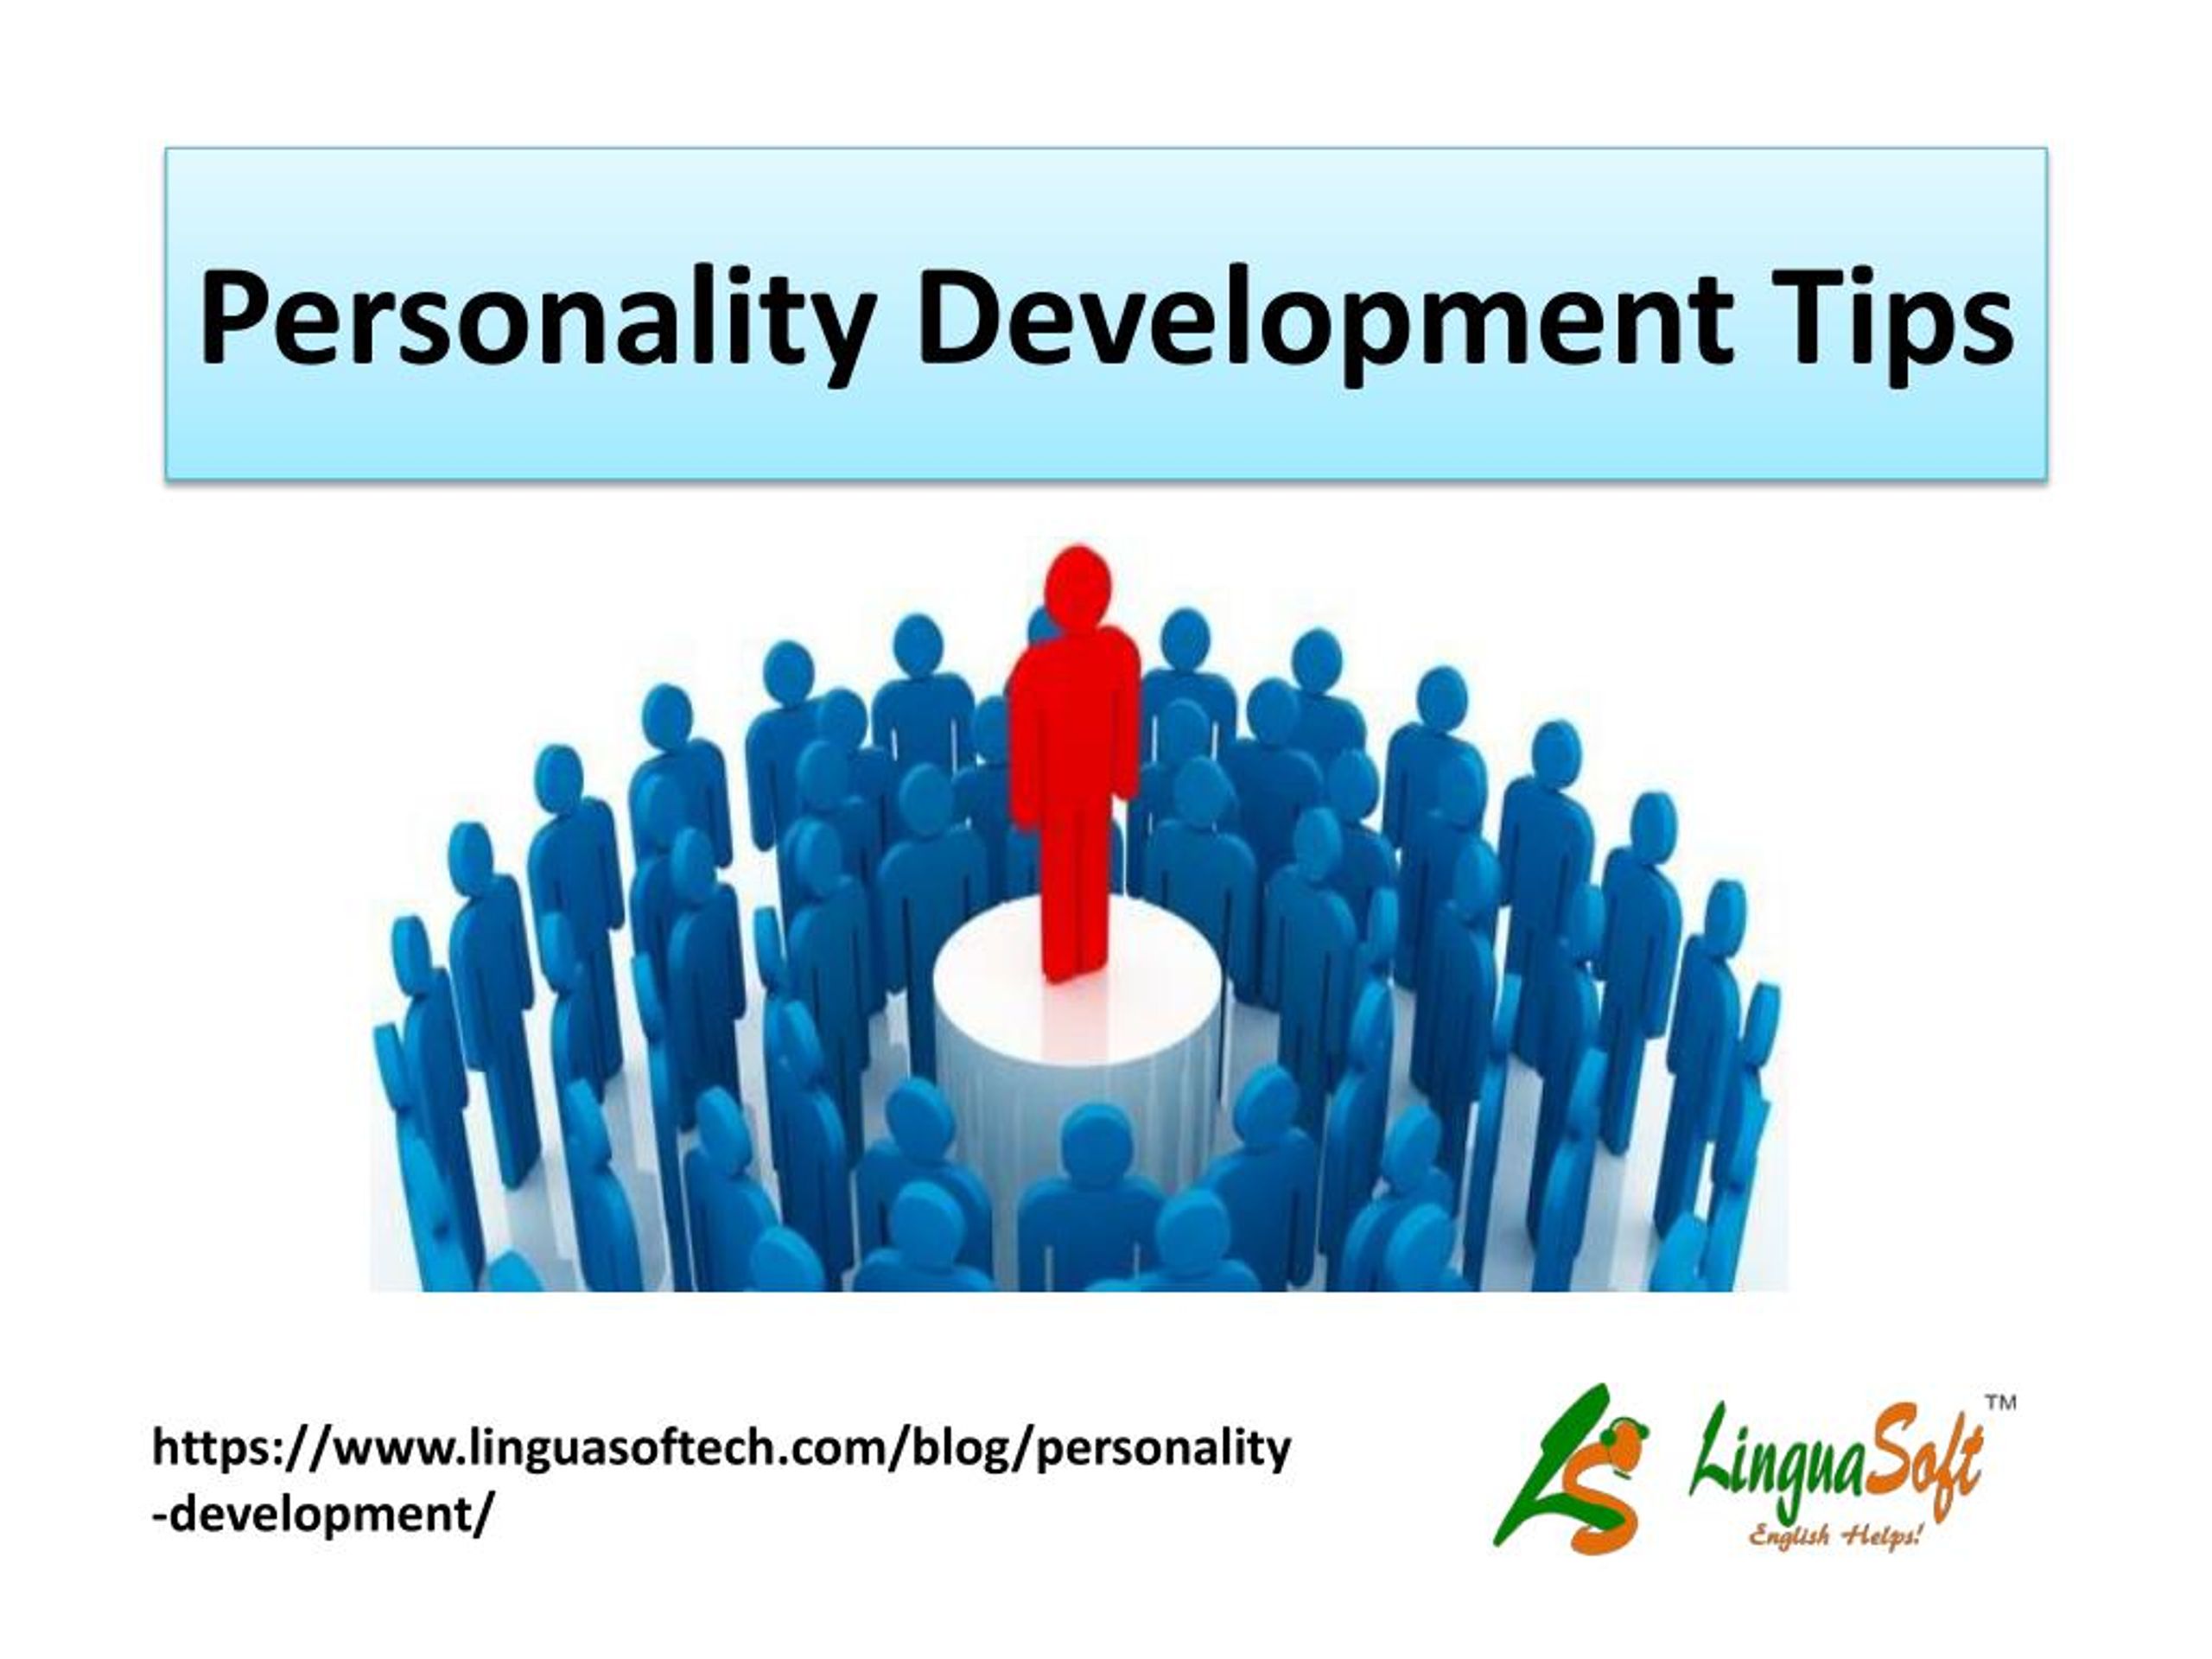 personality development presentation pdf